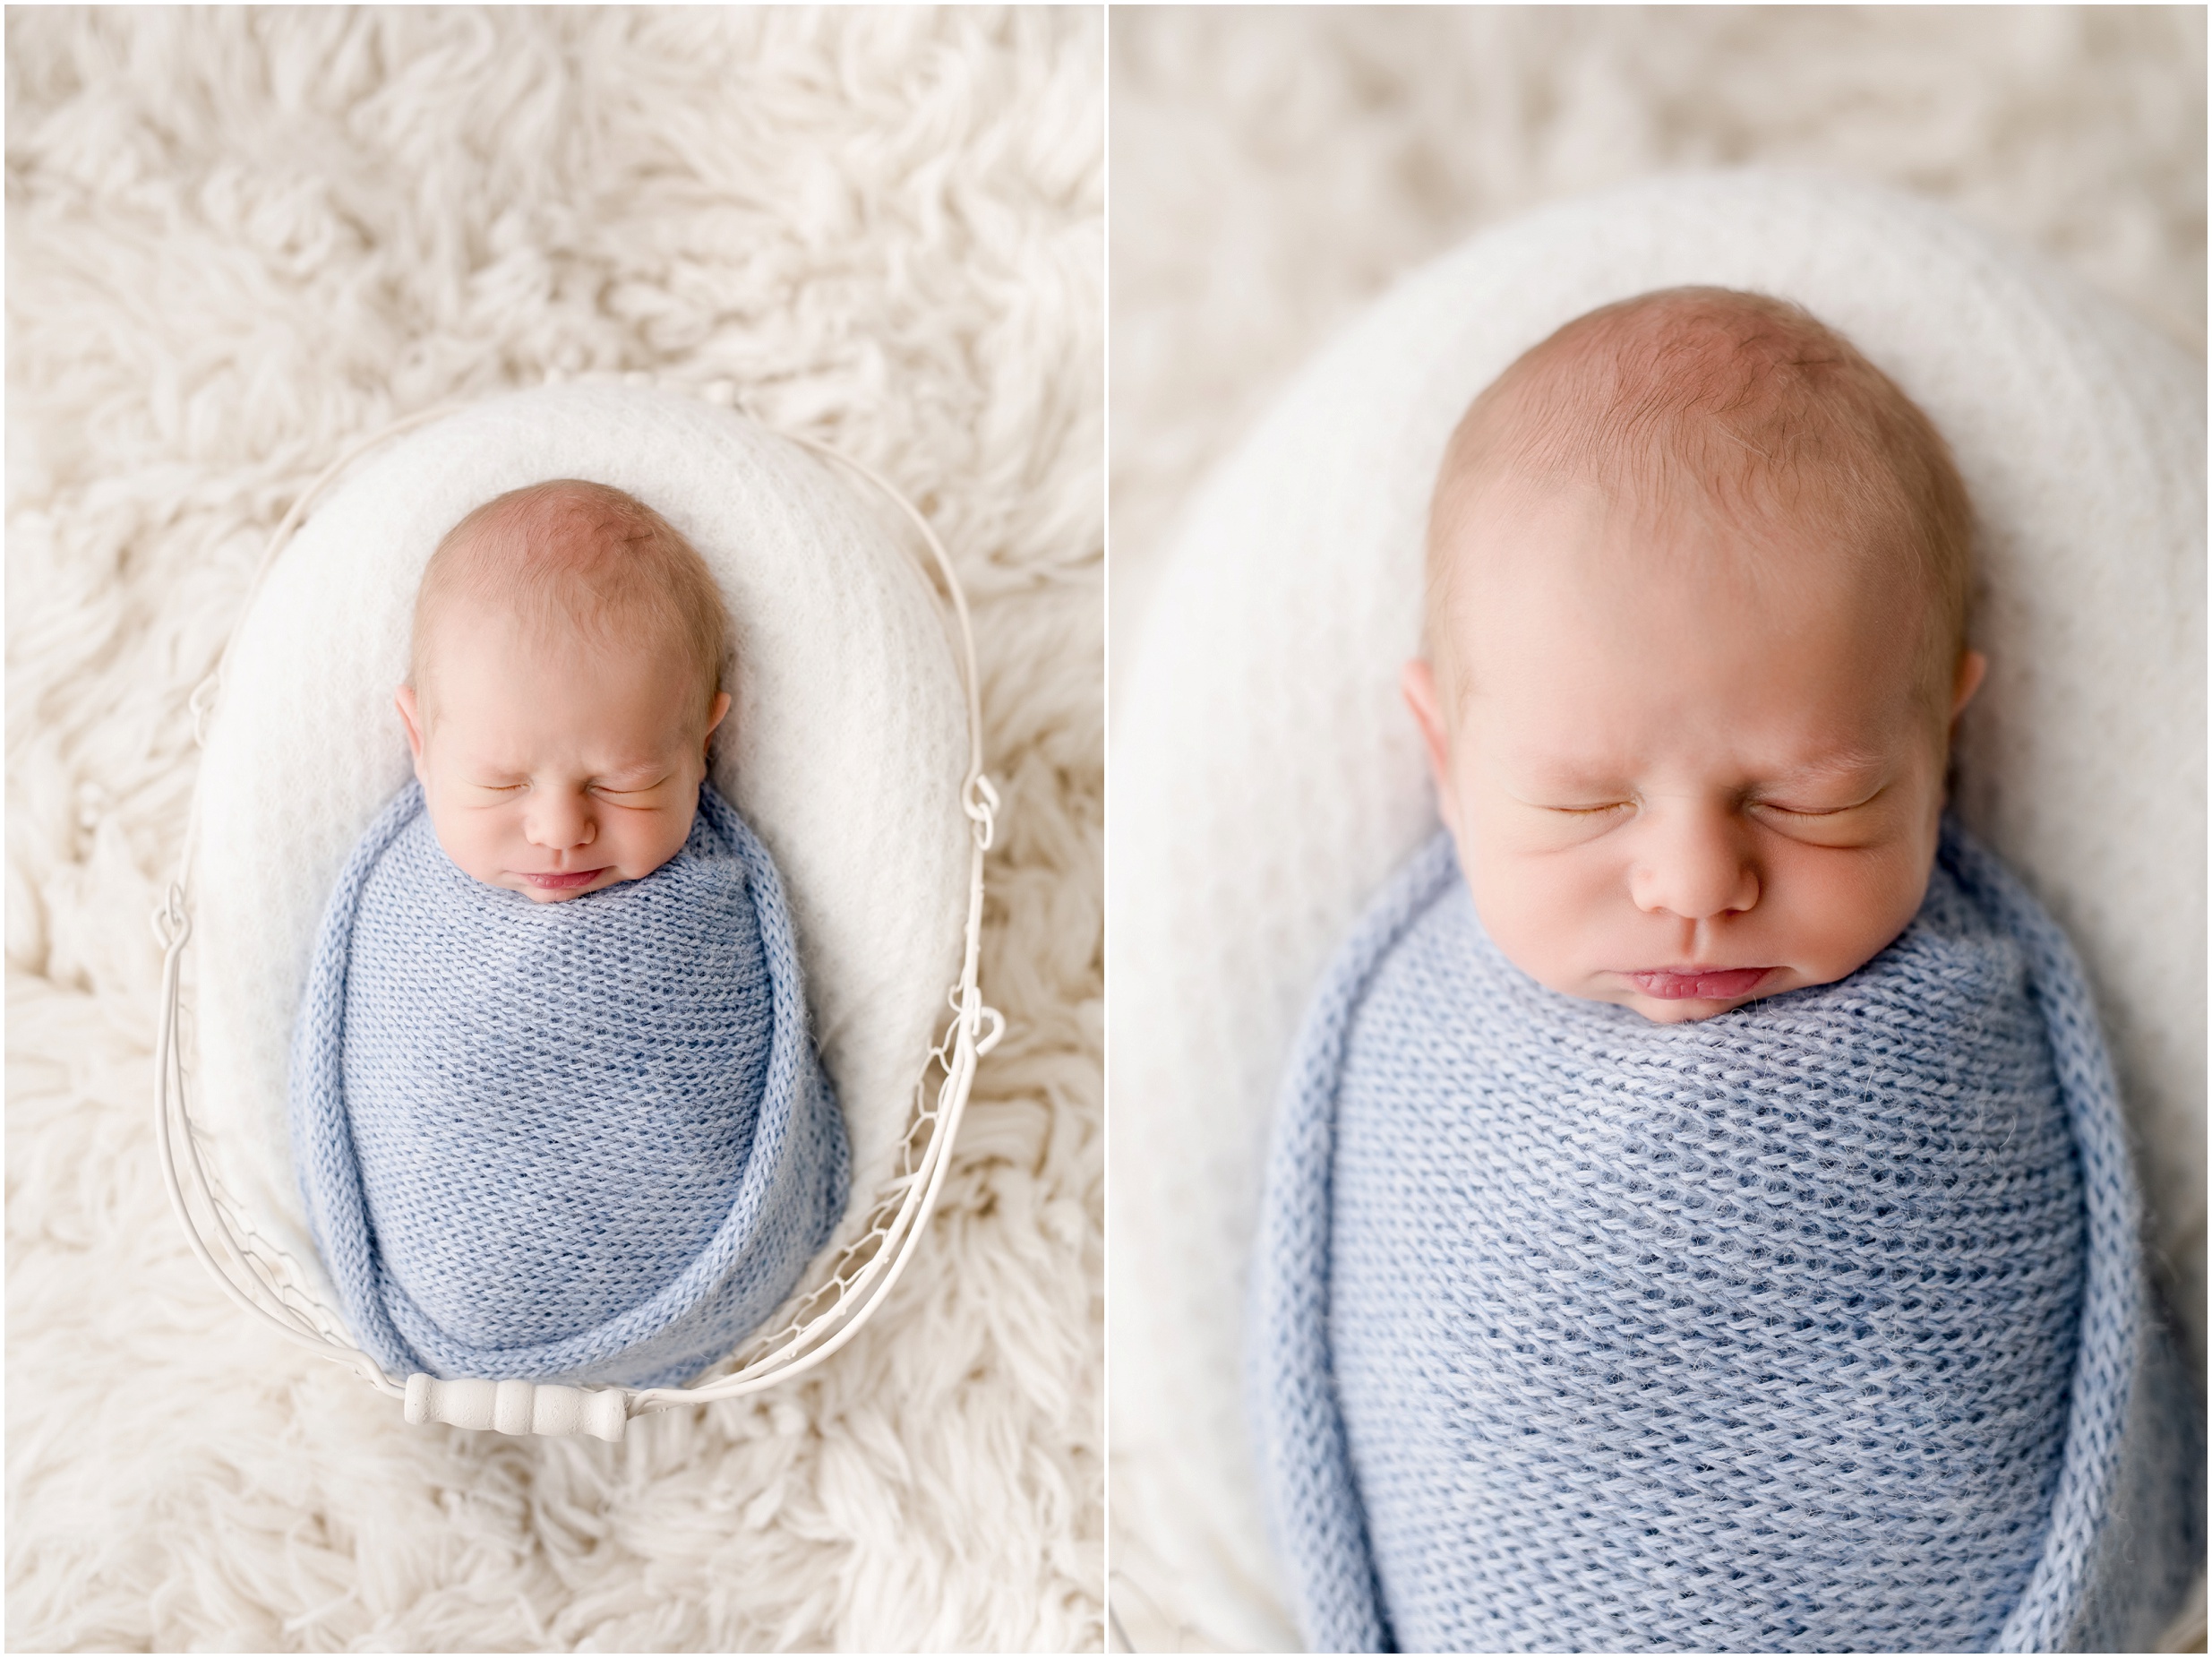 yeg newborn photographer, nc photography, boy newborn photos, edmonton newborn photographer